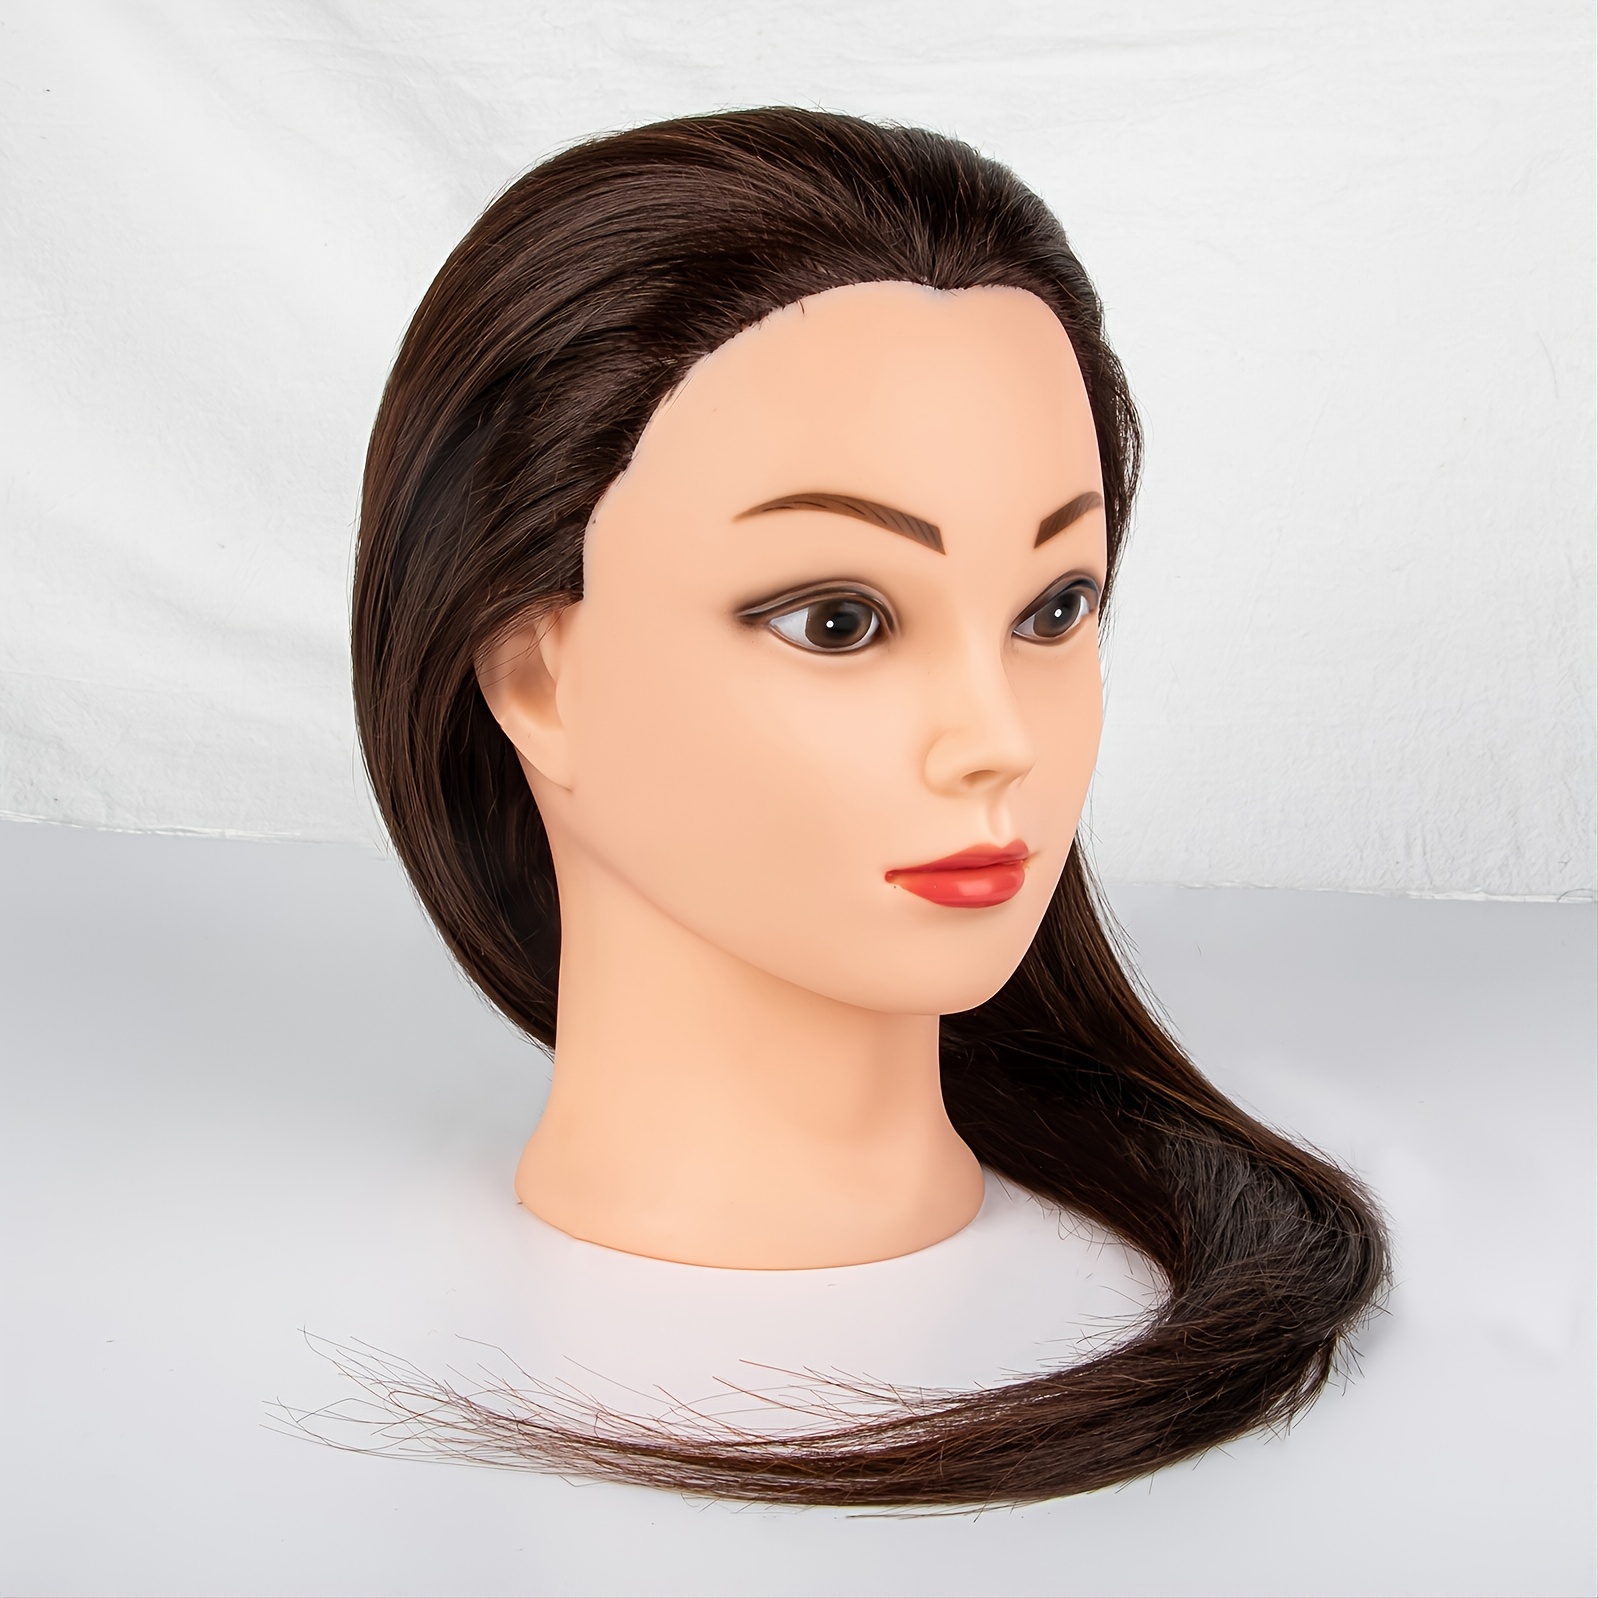 Mannequin Head Hair Practice Braiding